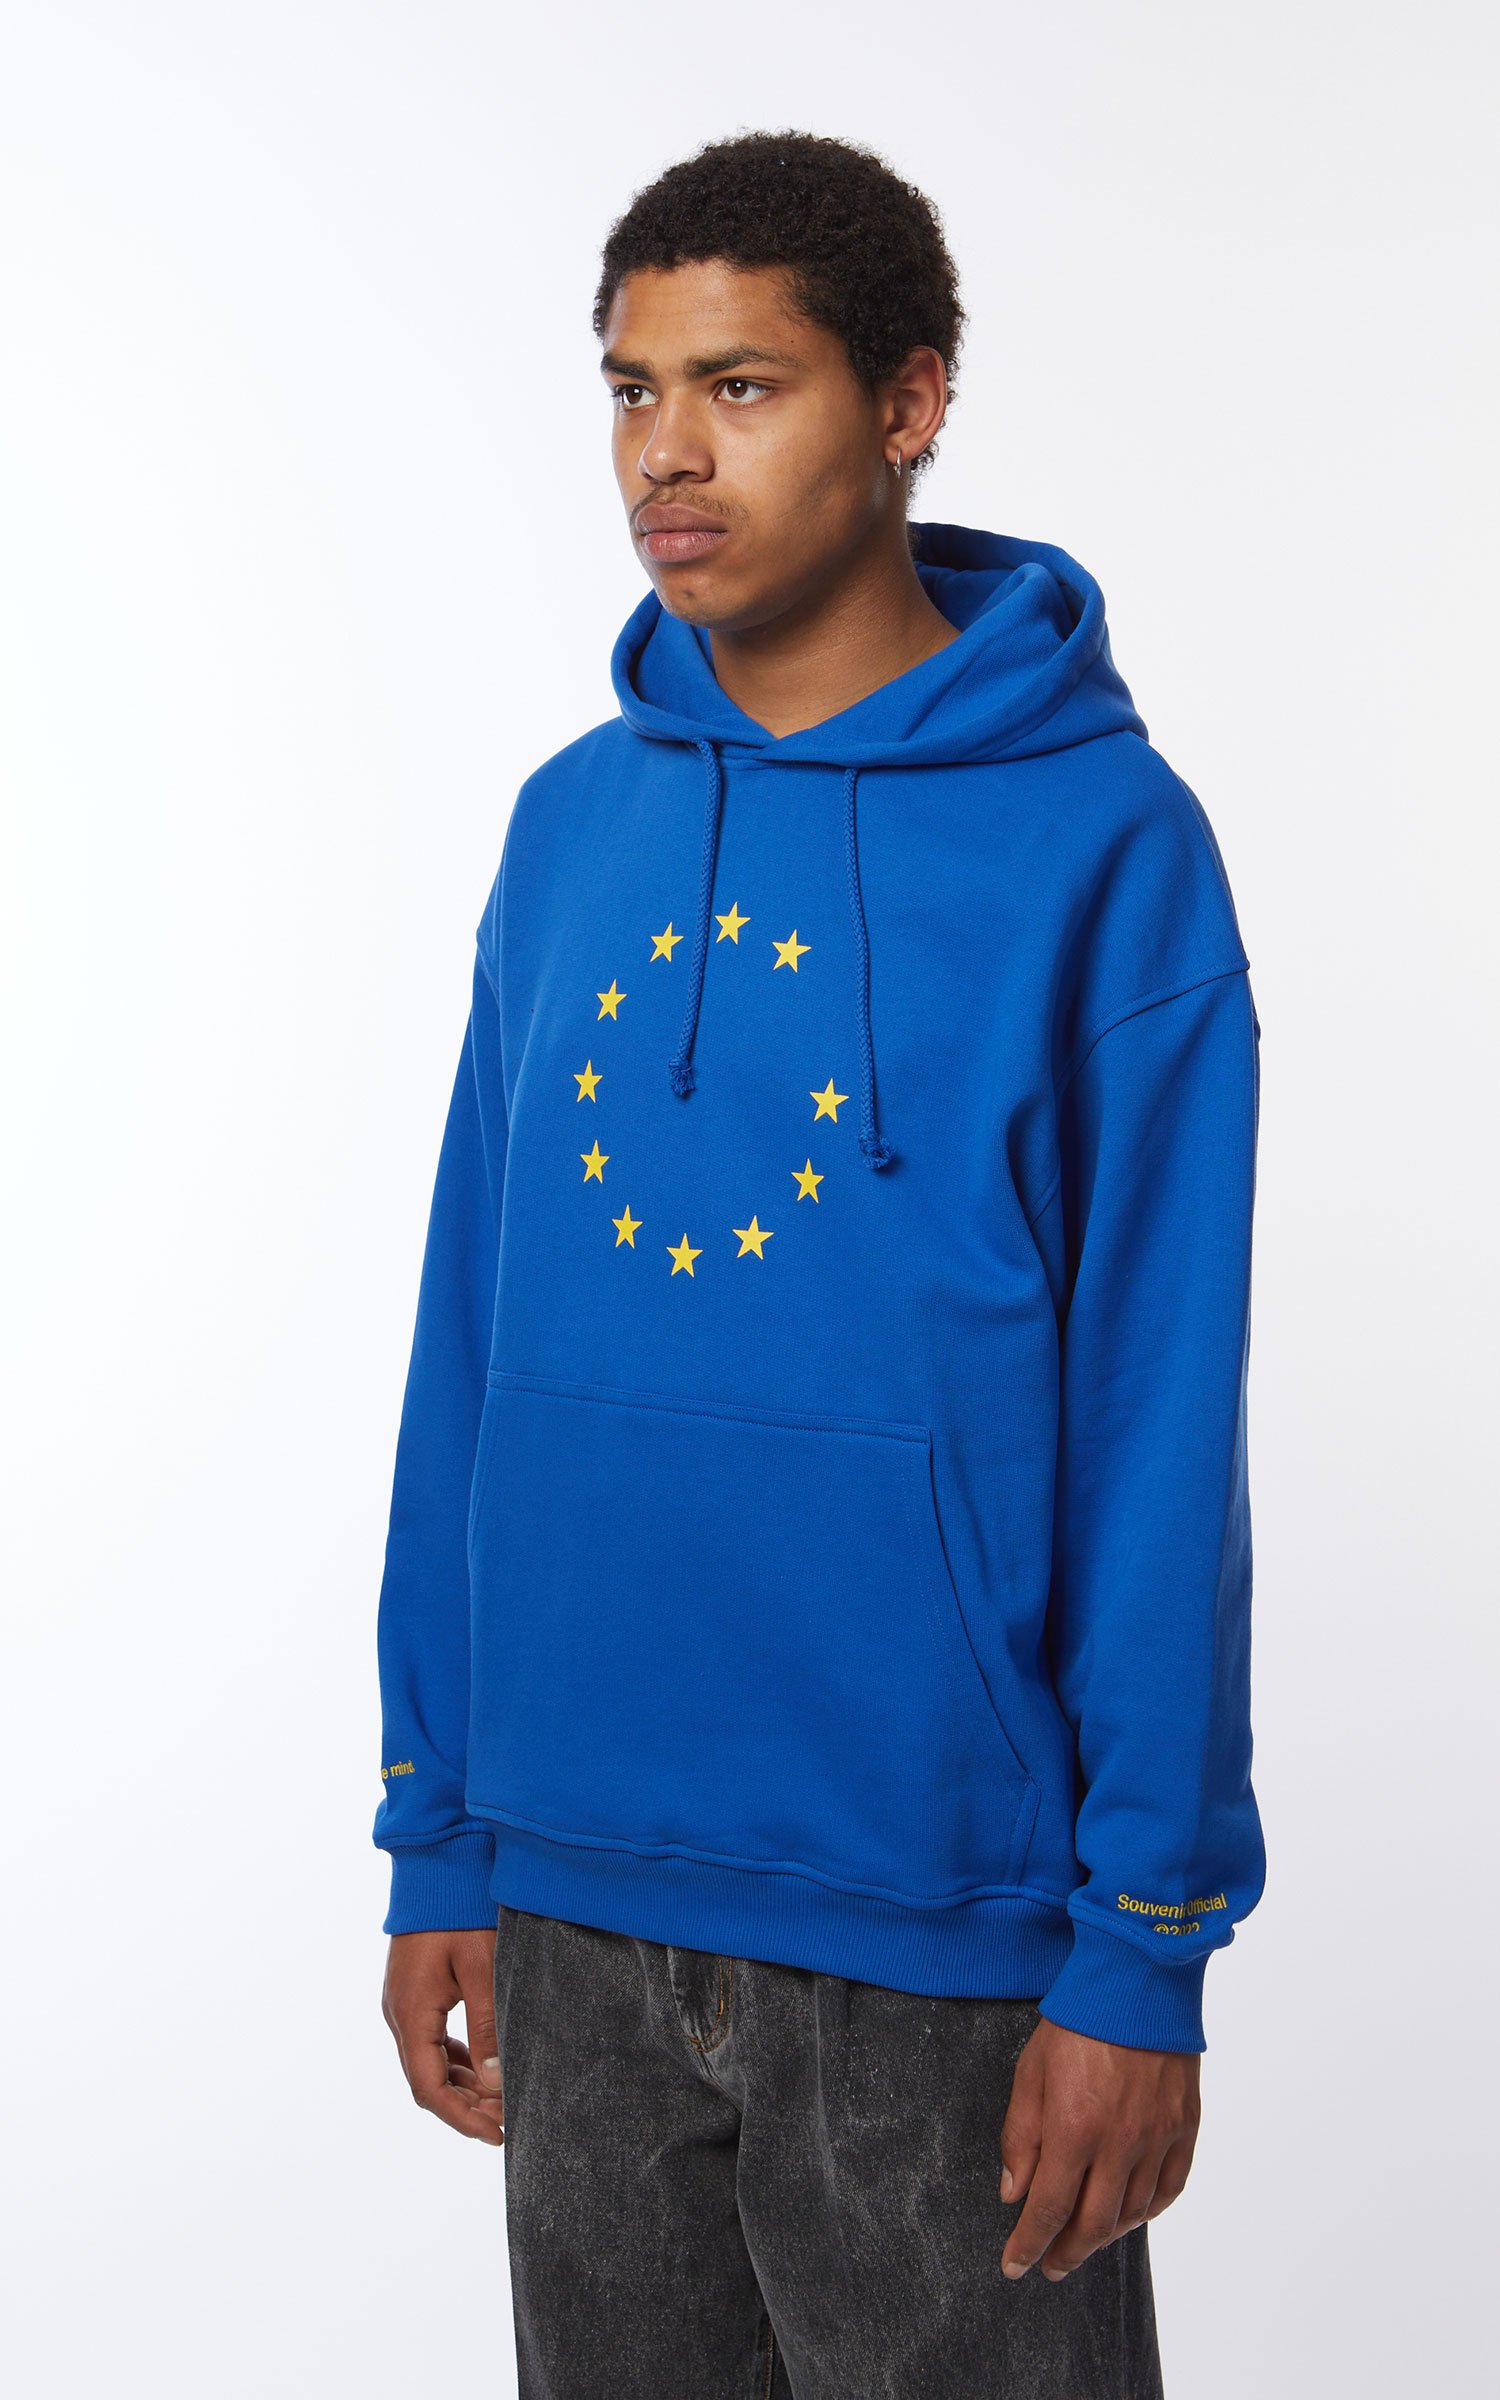 souvenir official hoodie